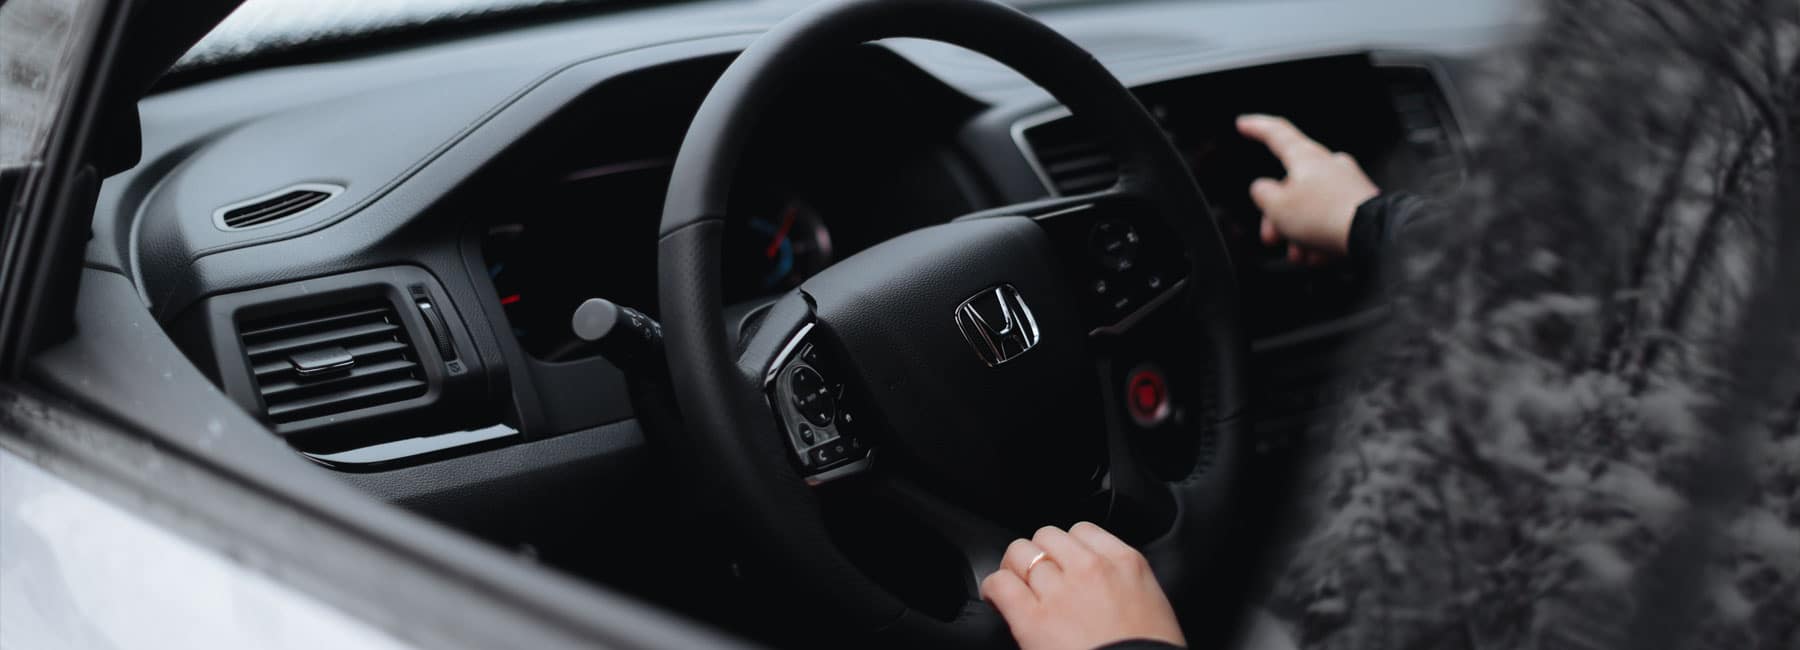 woman adjust radio in her Honda vehicle